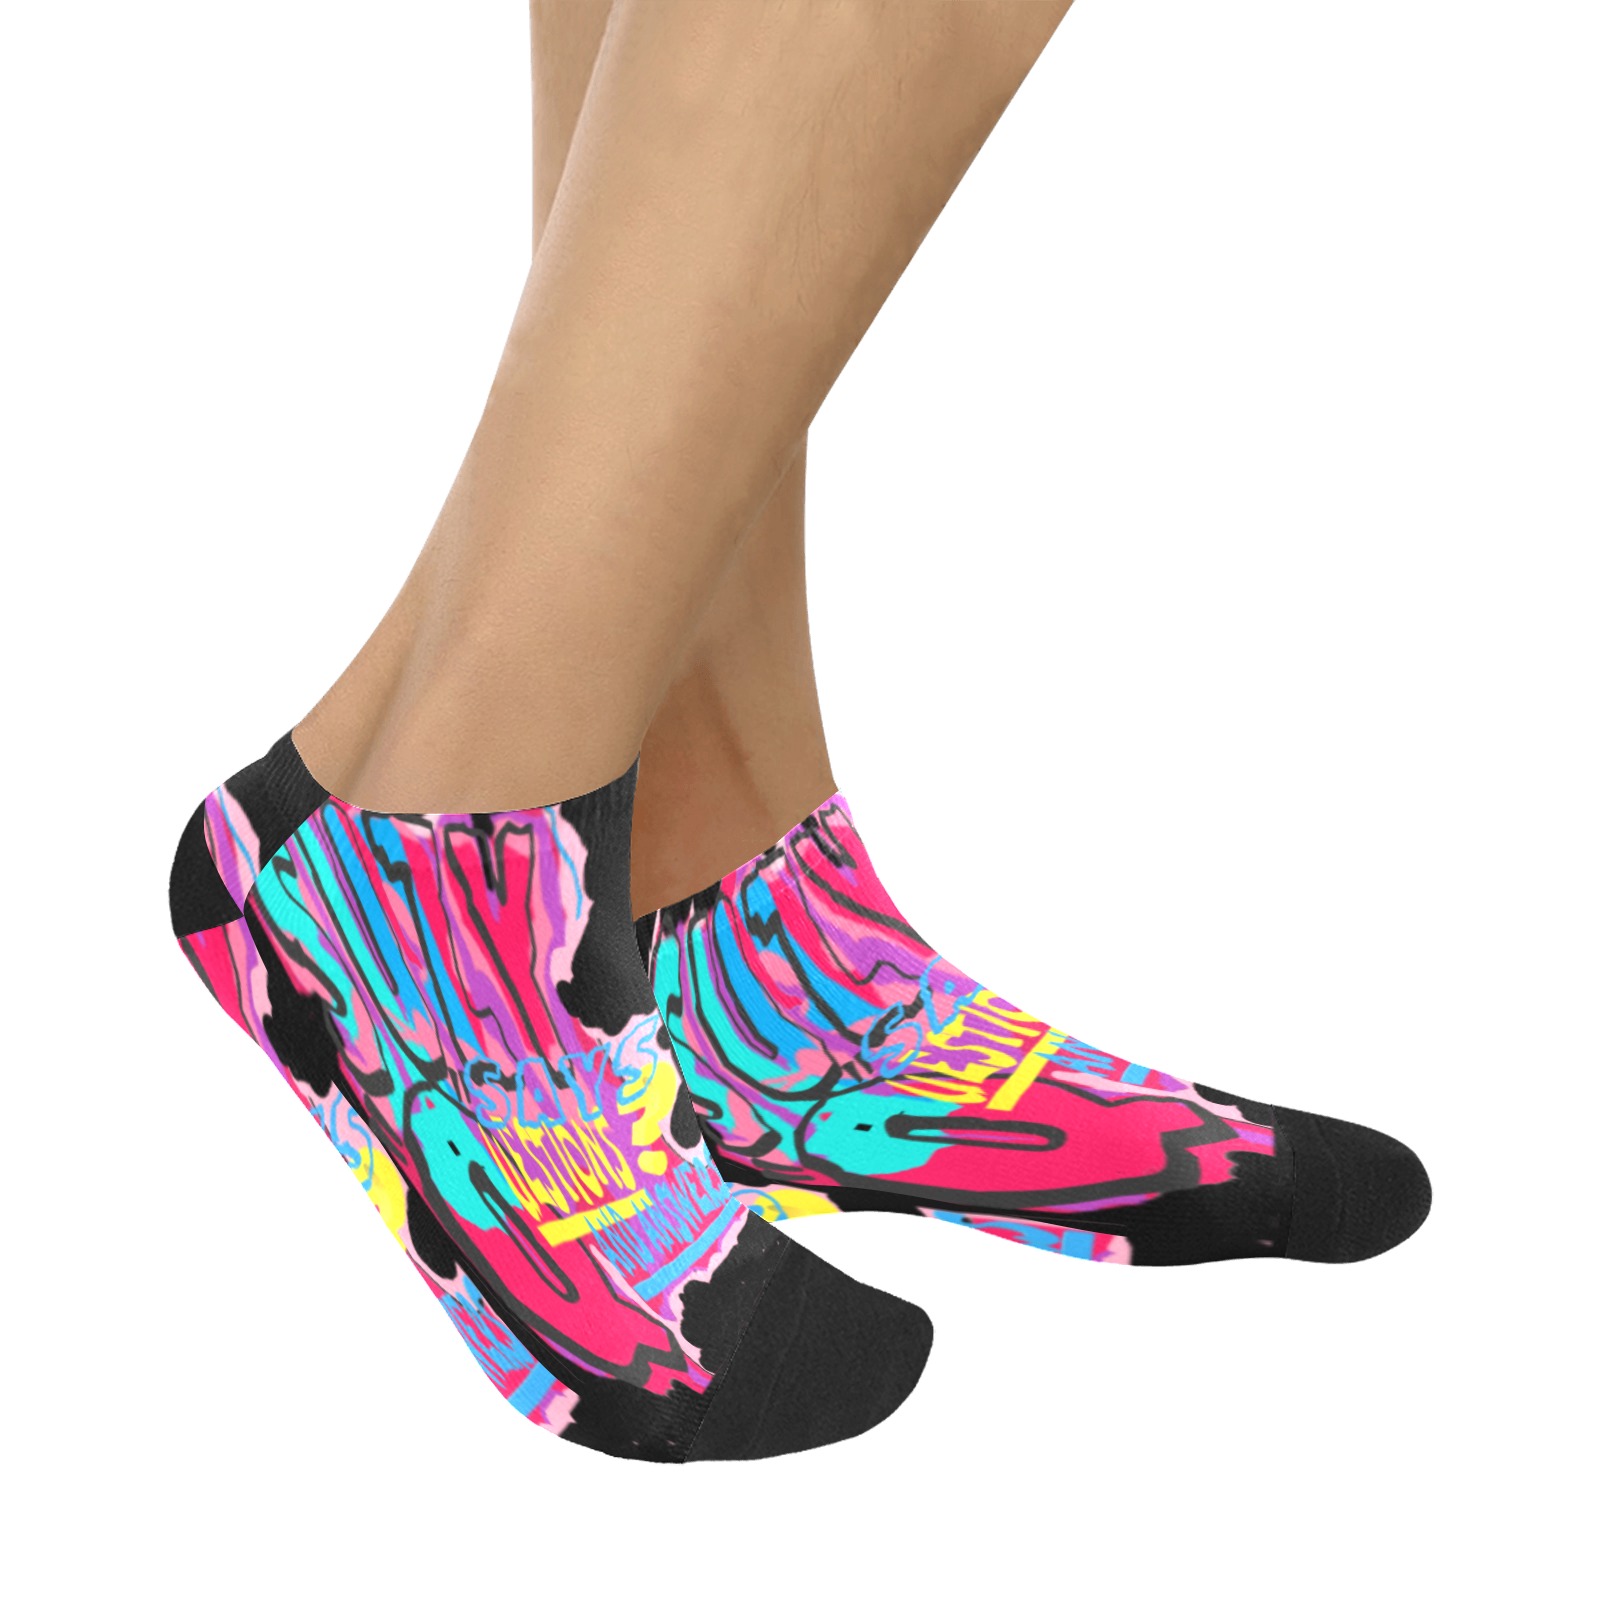 SUZY.Q.LOGO.BLK.BLKTRM Women's Ankle Socks